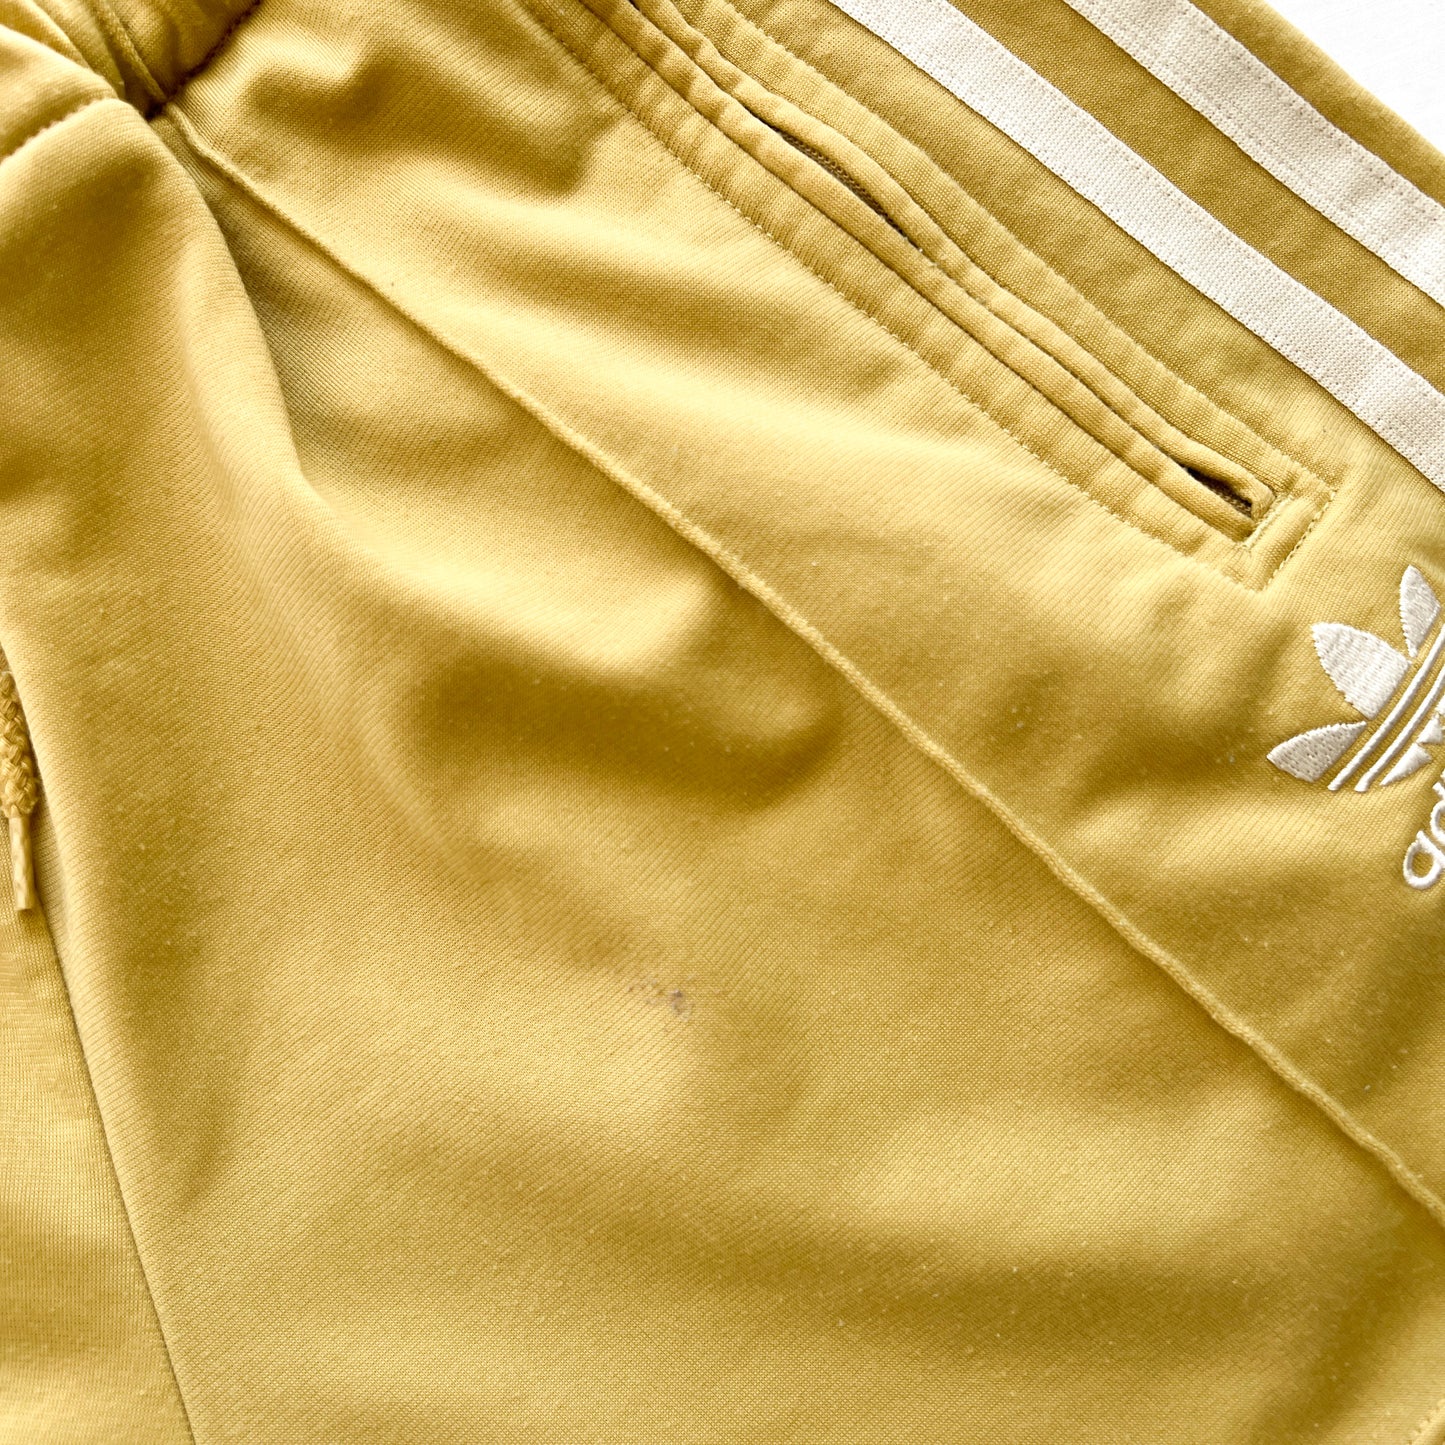 (S/34) Adidas reworked corset set vintage beige yellow